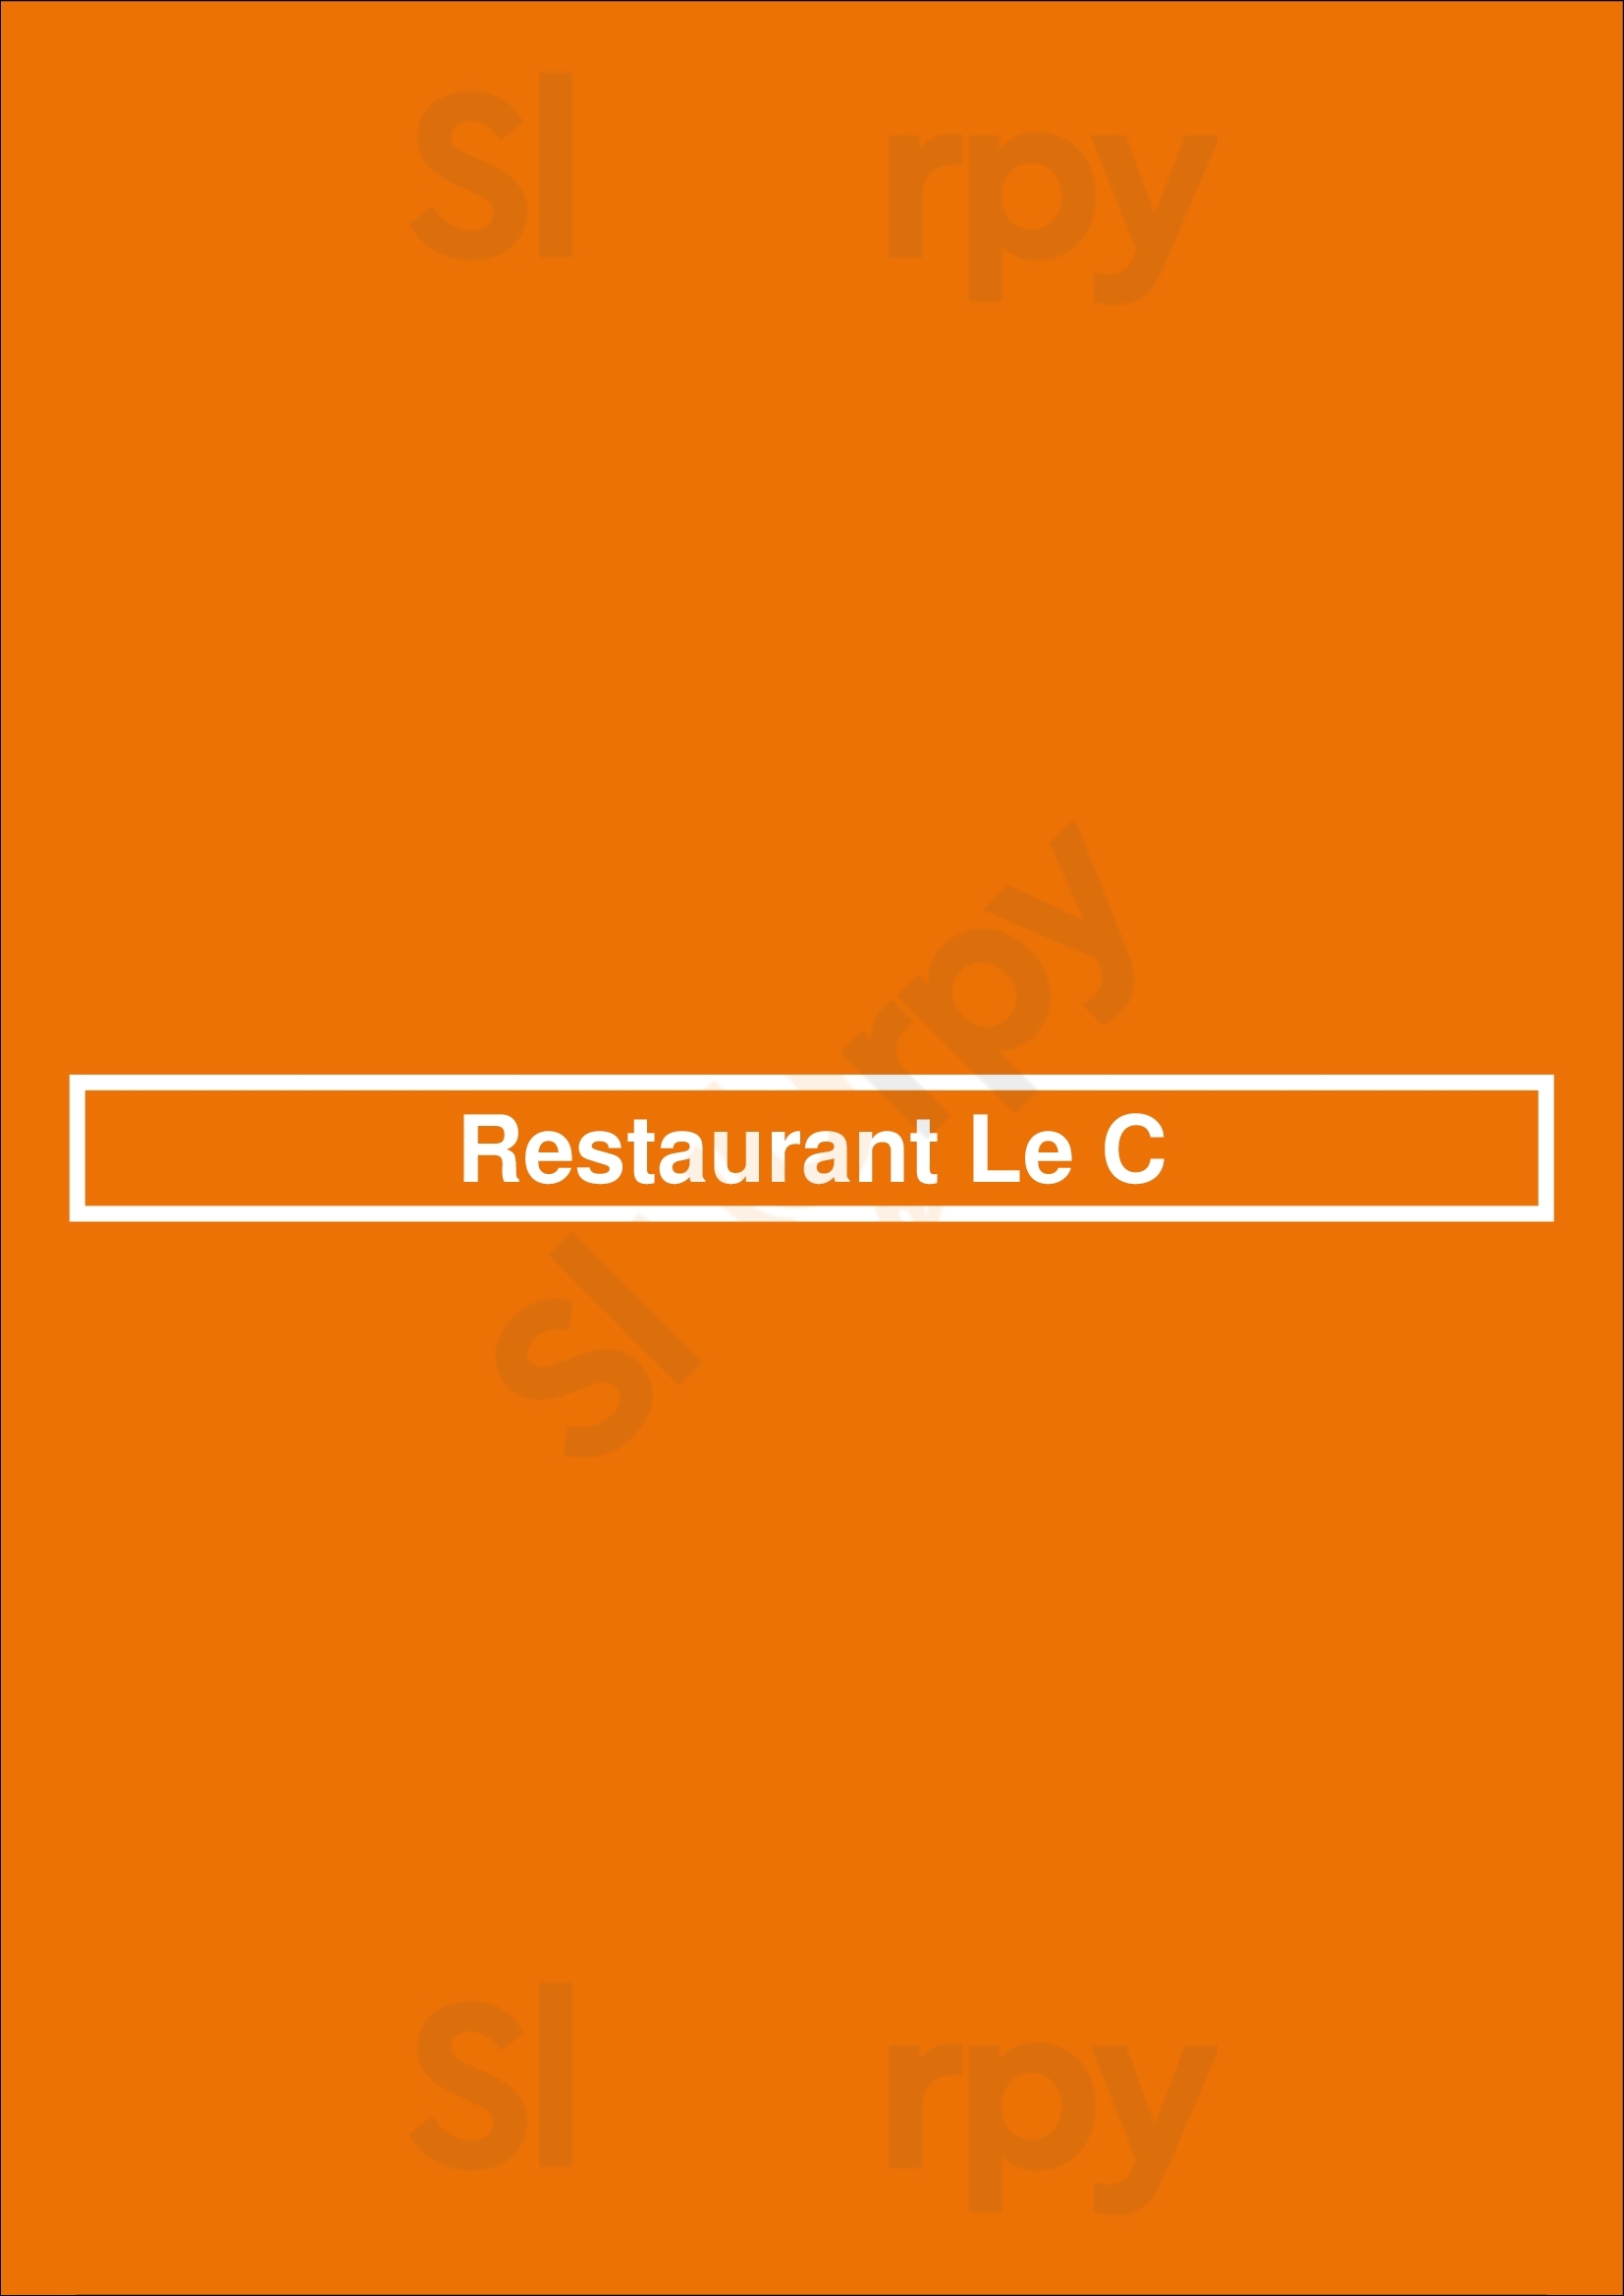 Restaurant Le C Guethary Menu - 1